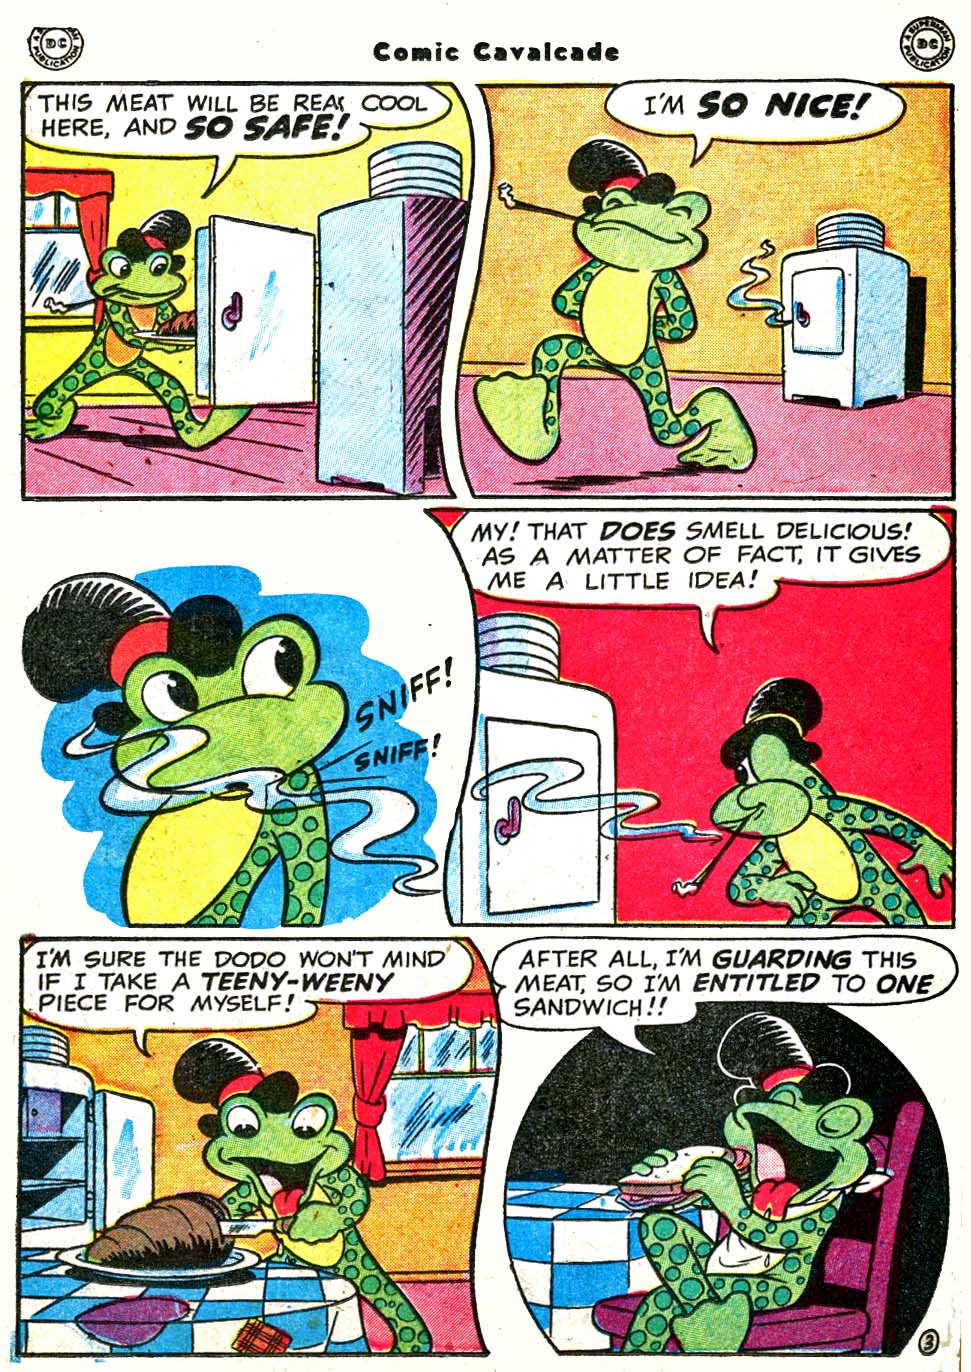 Comic Cavalcade issue 31 - Page 68